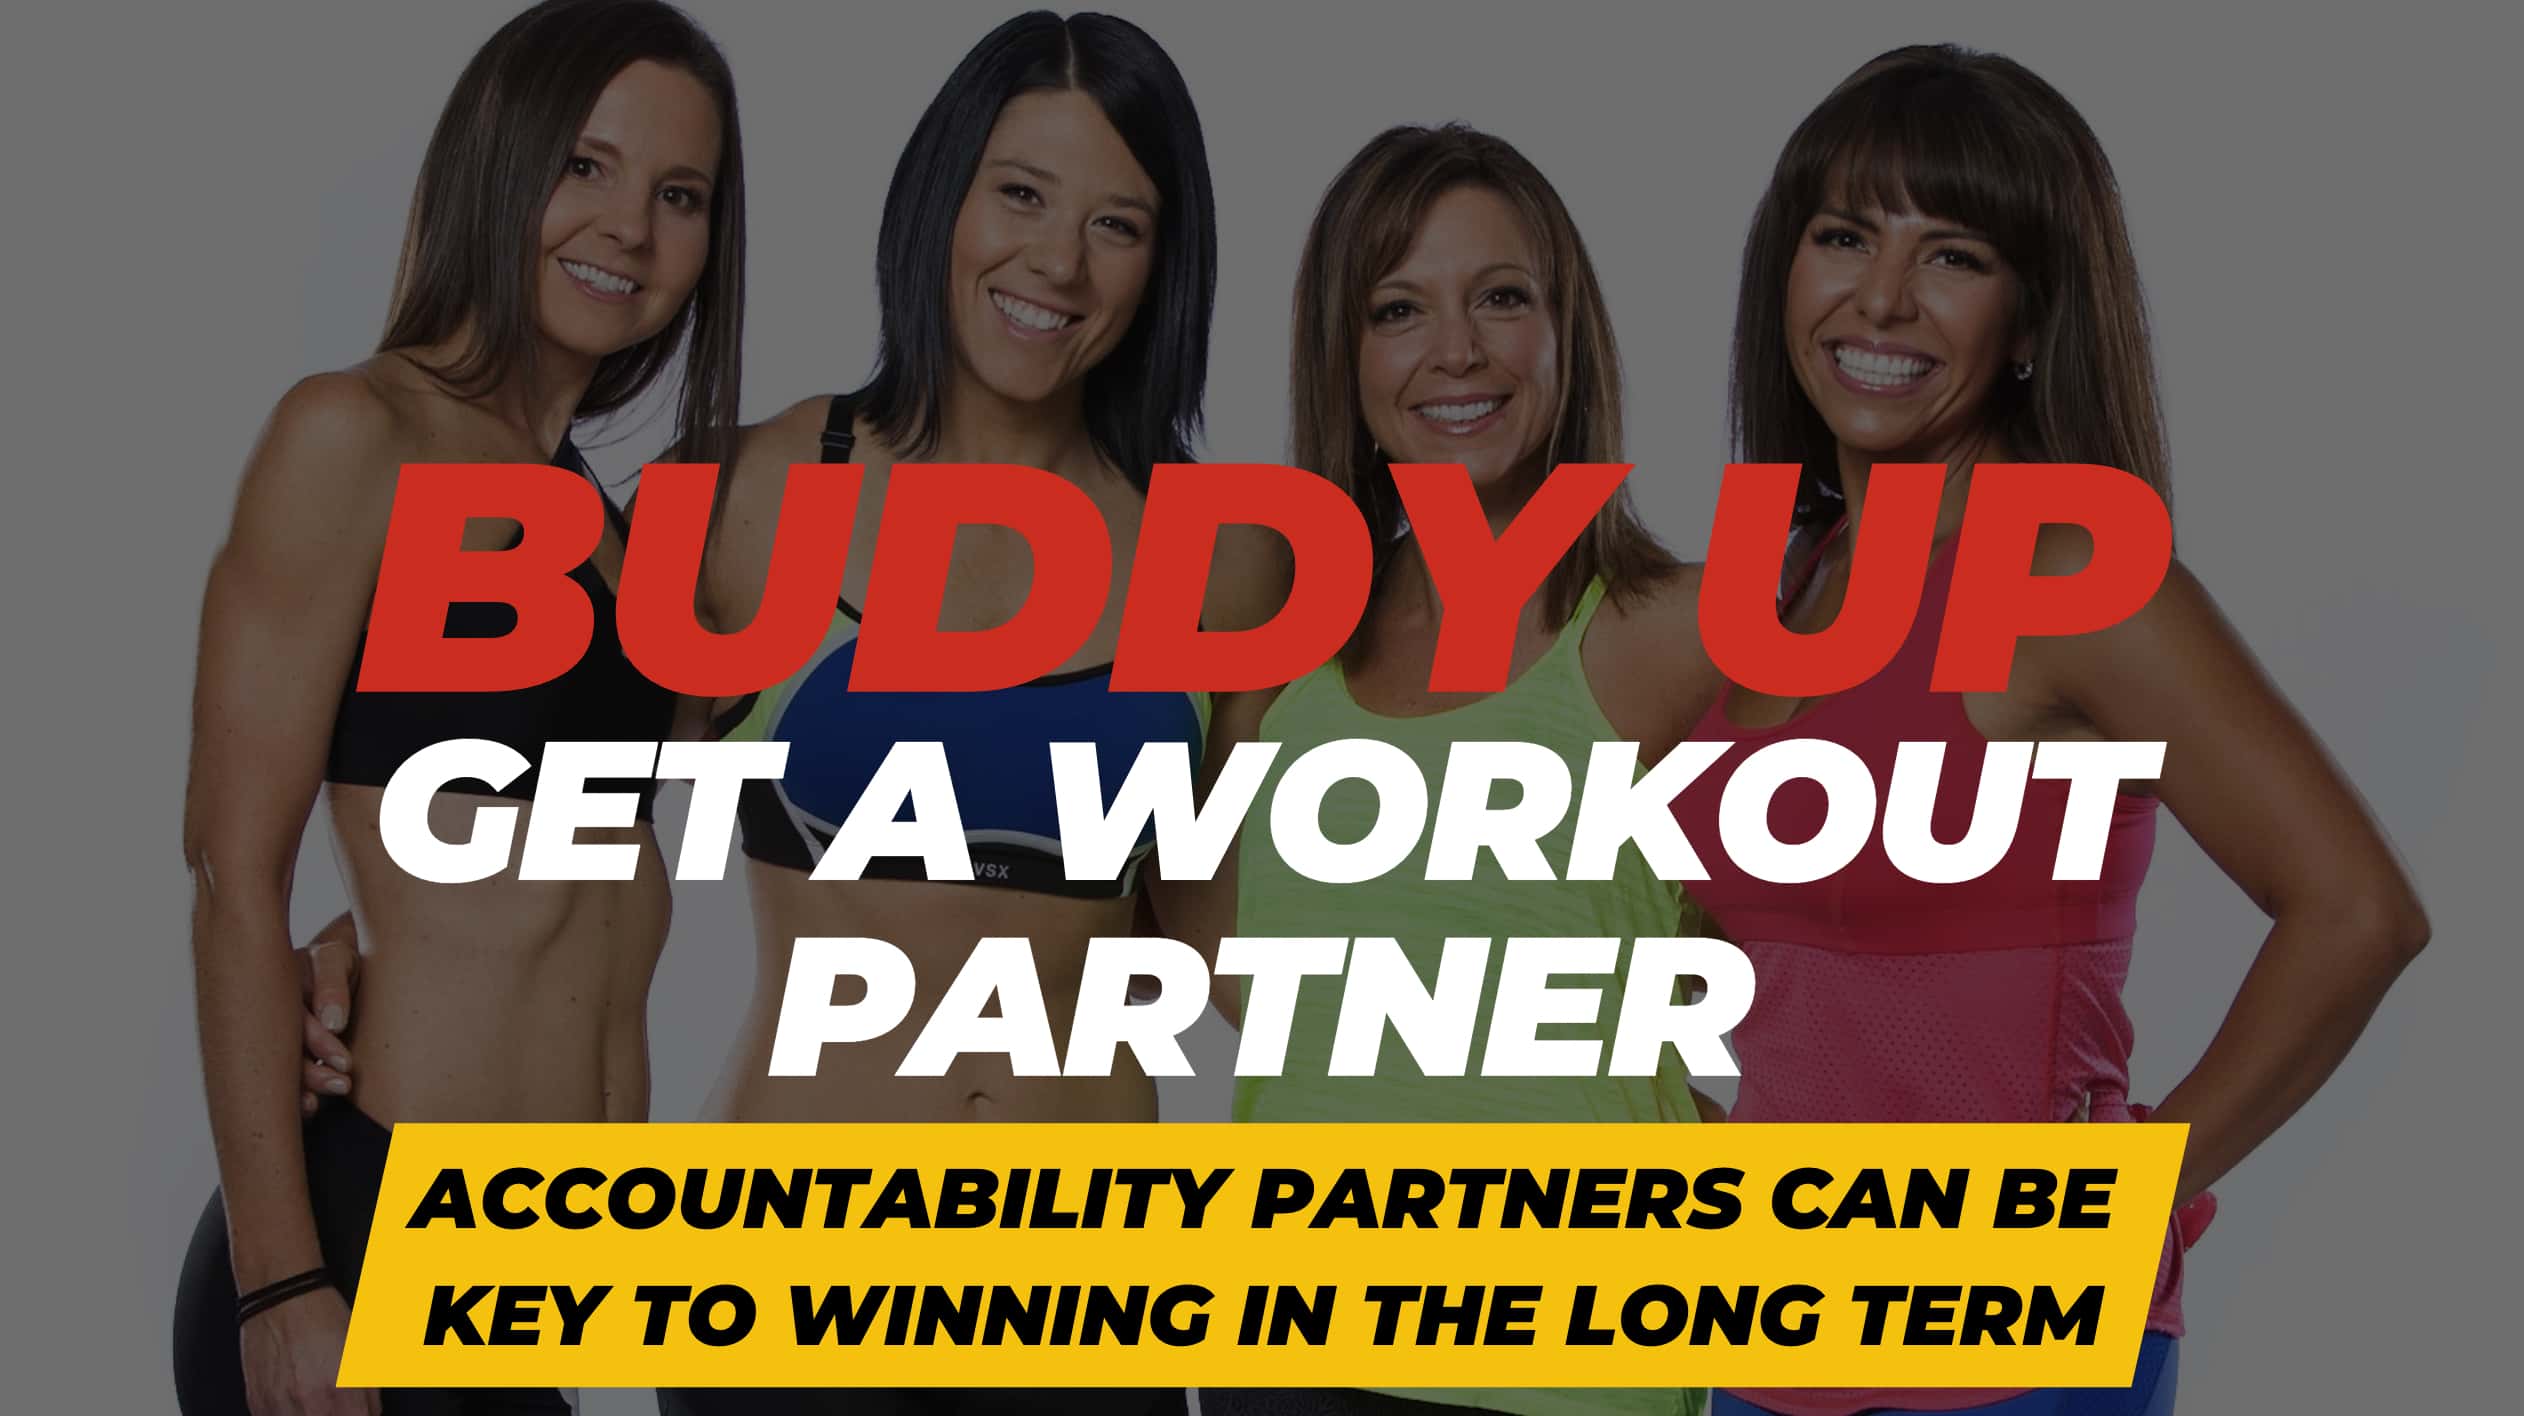 Exercise Motivation - Buddy Up - Get a Workout Partner